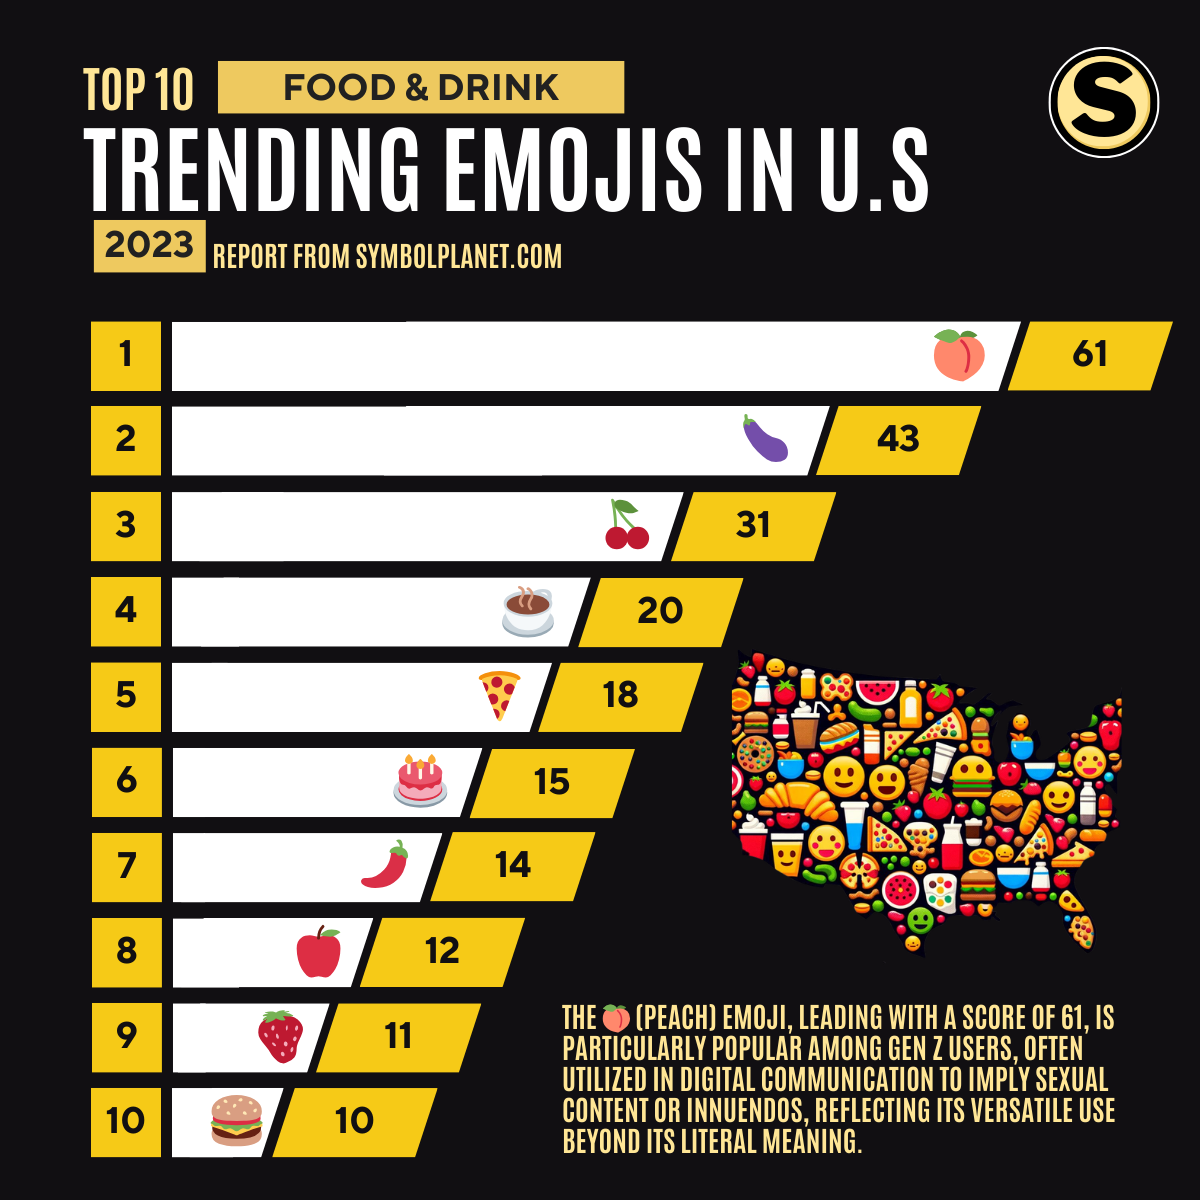 Top 10 Trending (Food & Drink) Emojis of 2023 in the United States